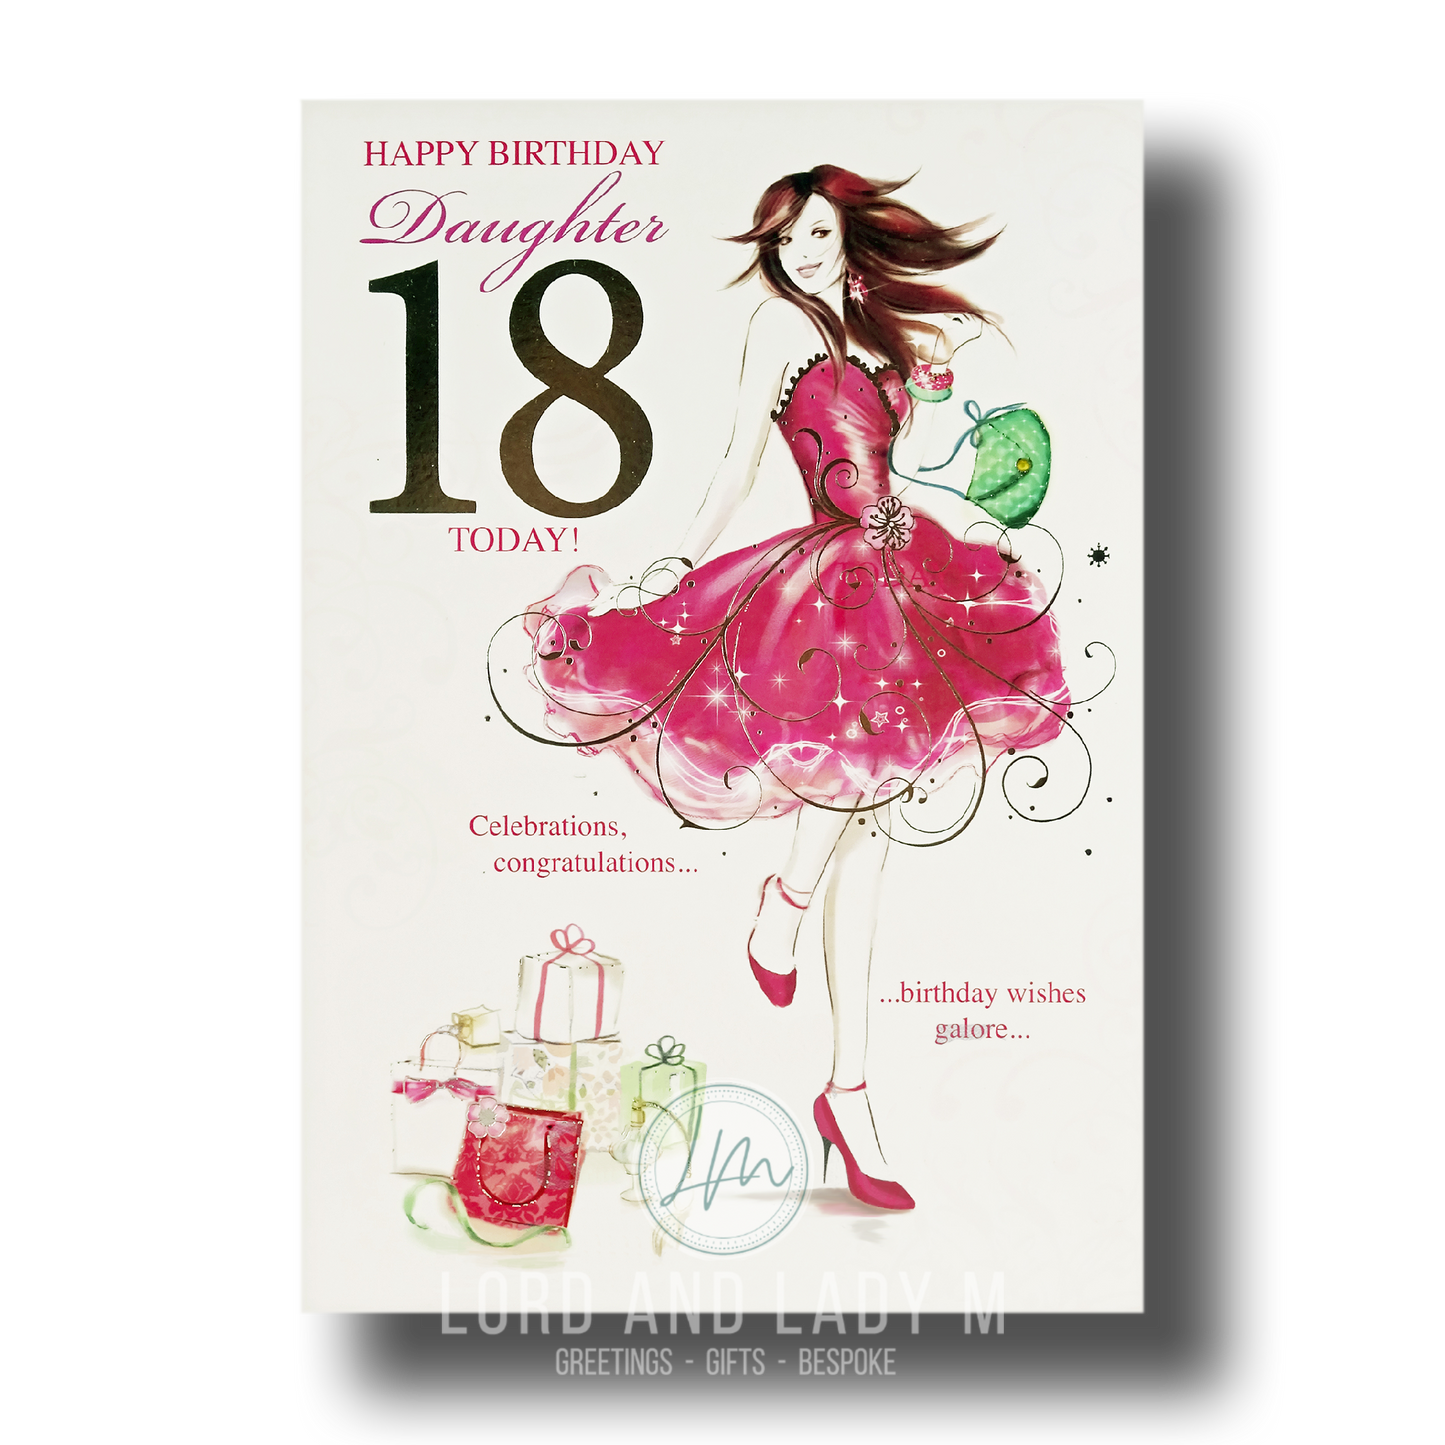 22cm - Happy Birthday Daughter 18 Today! - E